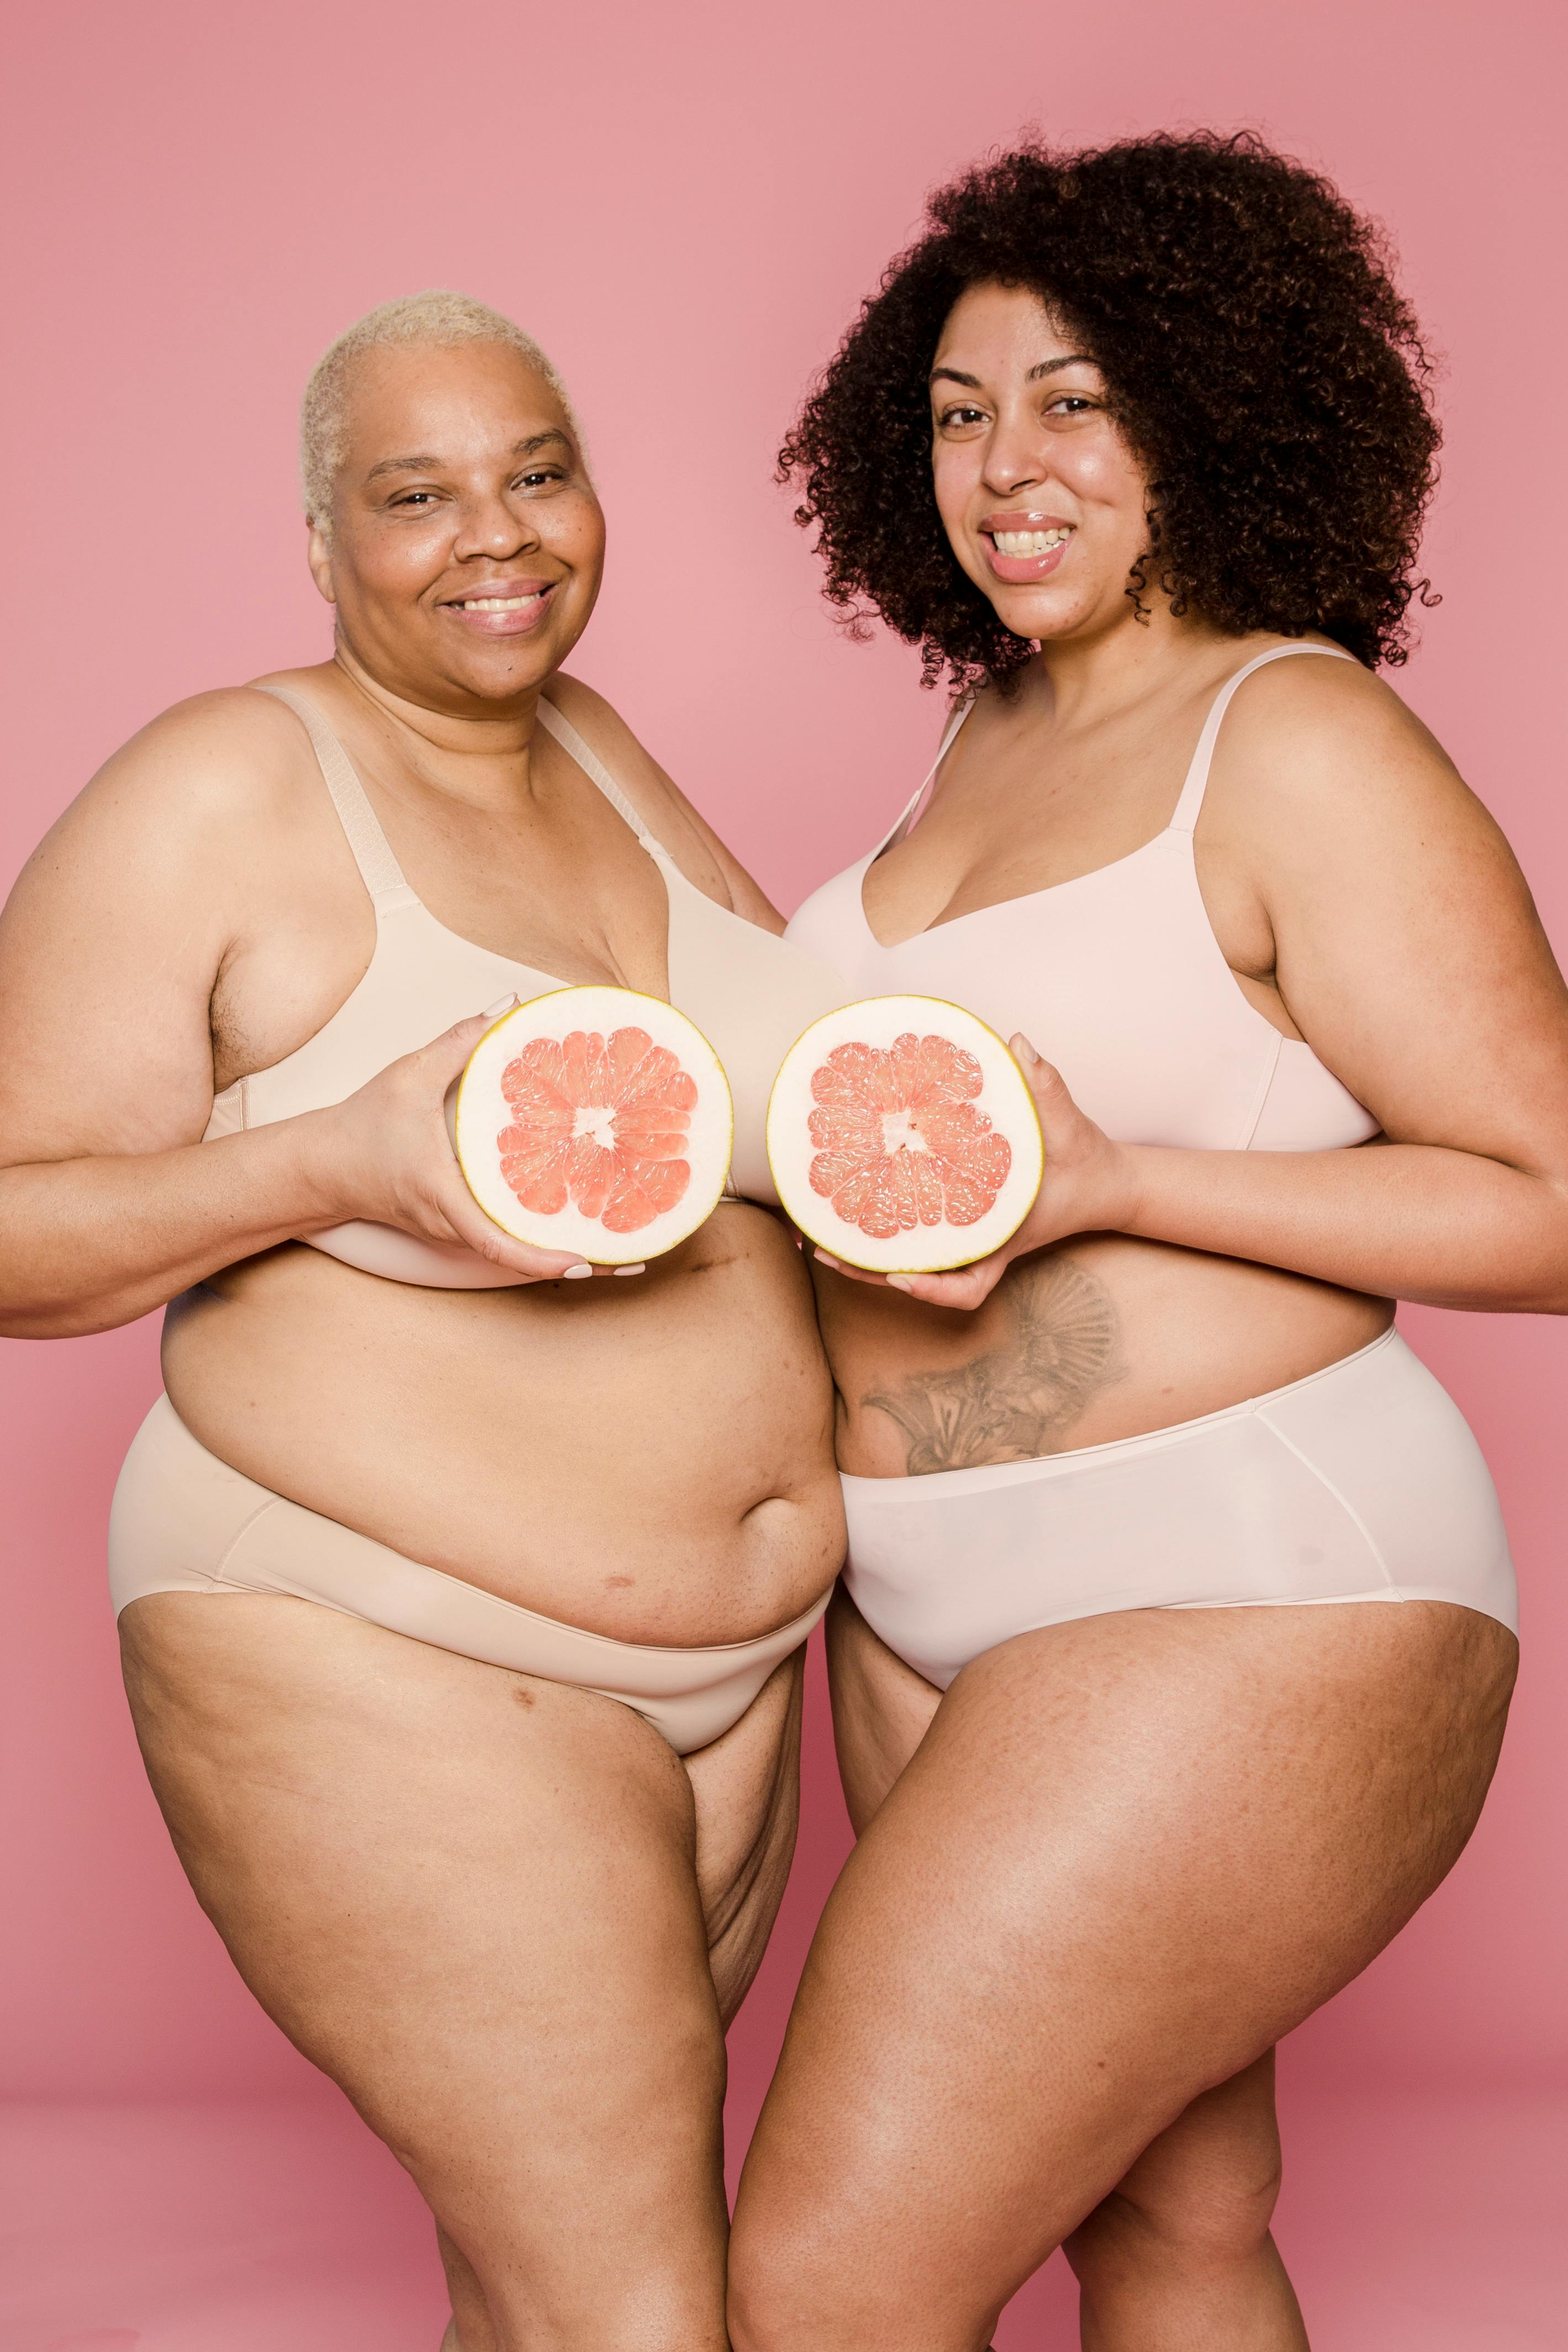 Cheerful plump black women in underwear with melon · Free Stock Photo